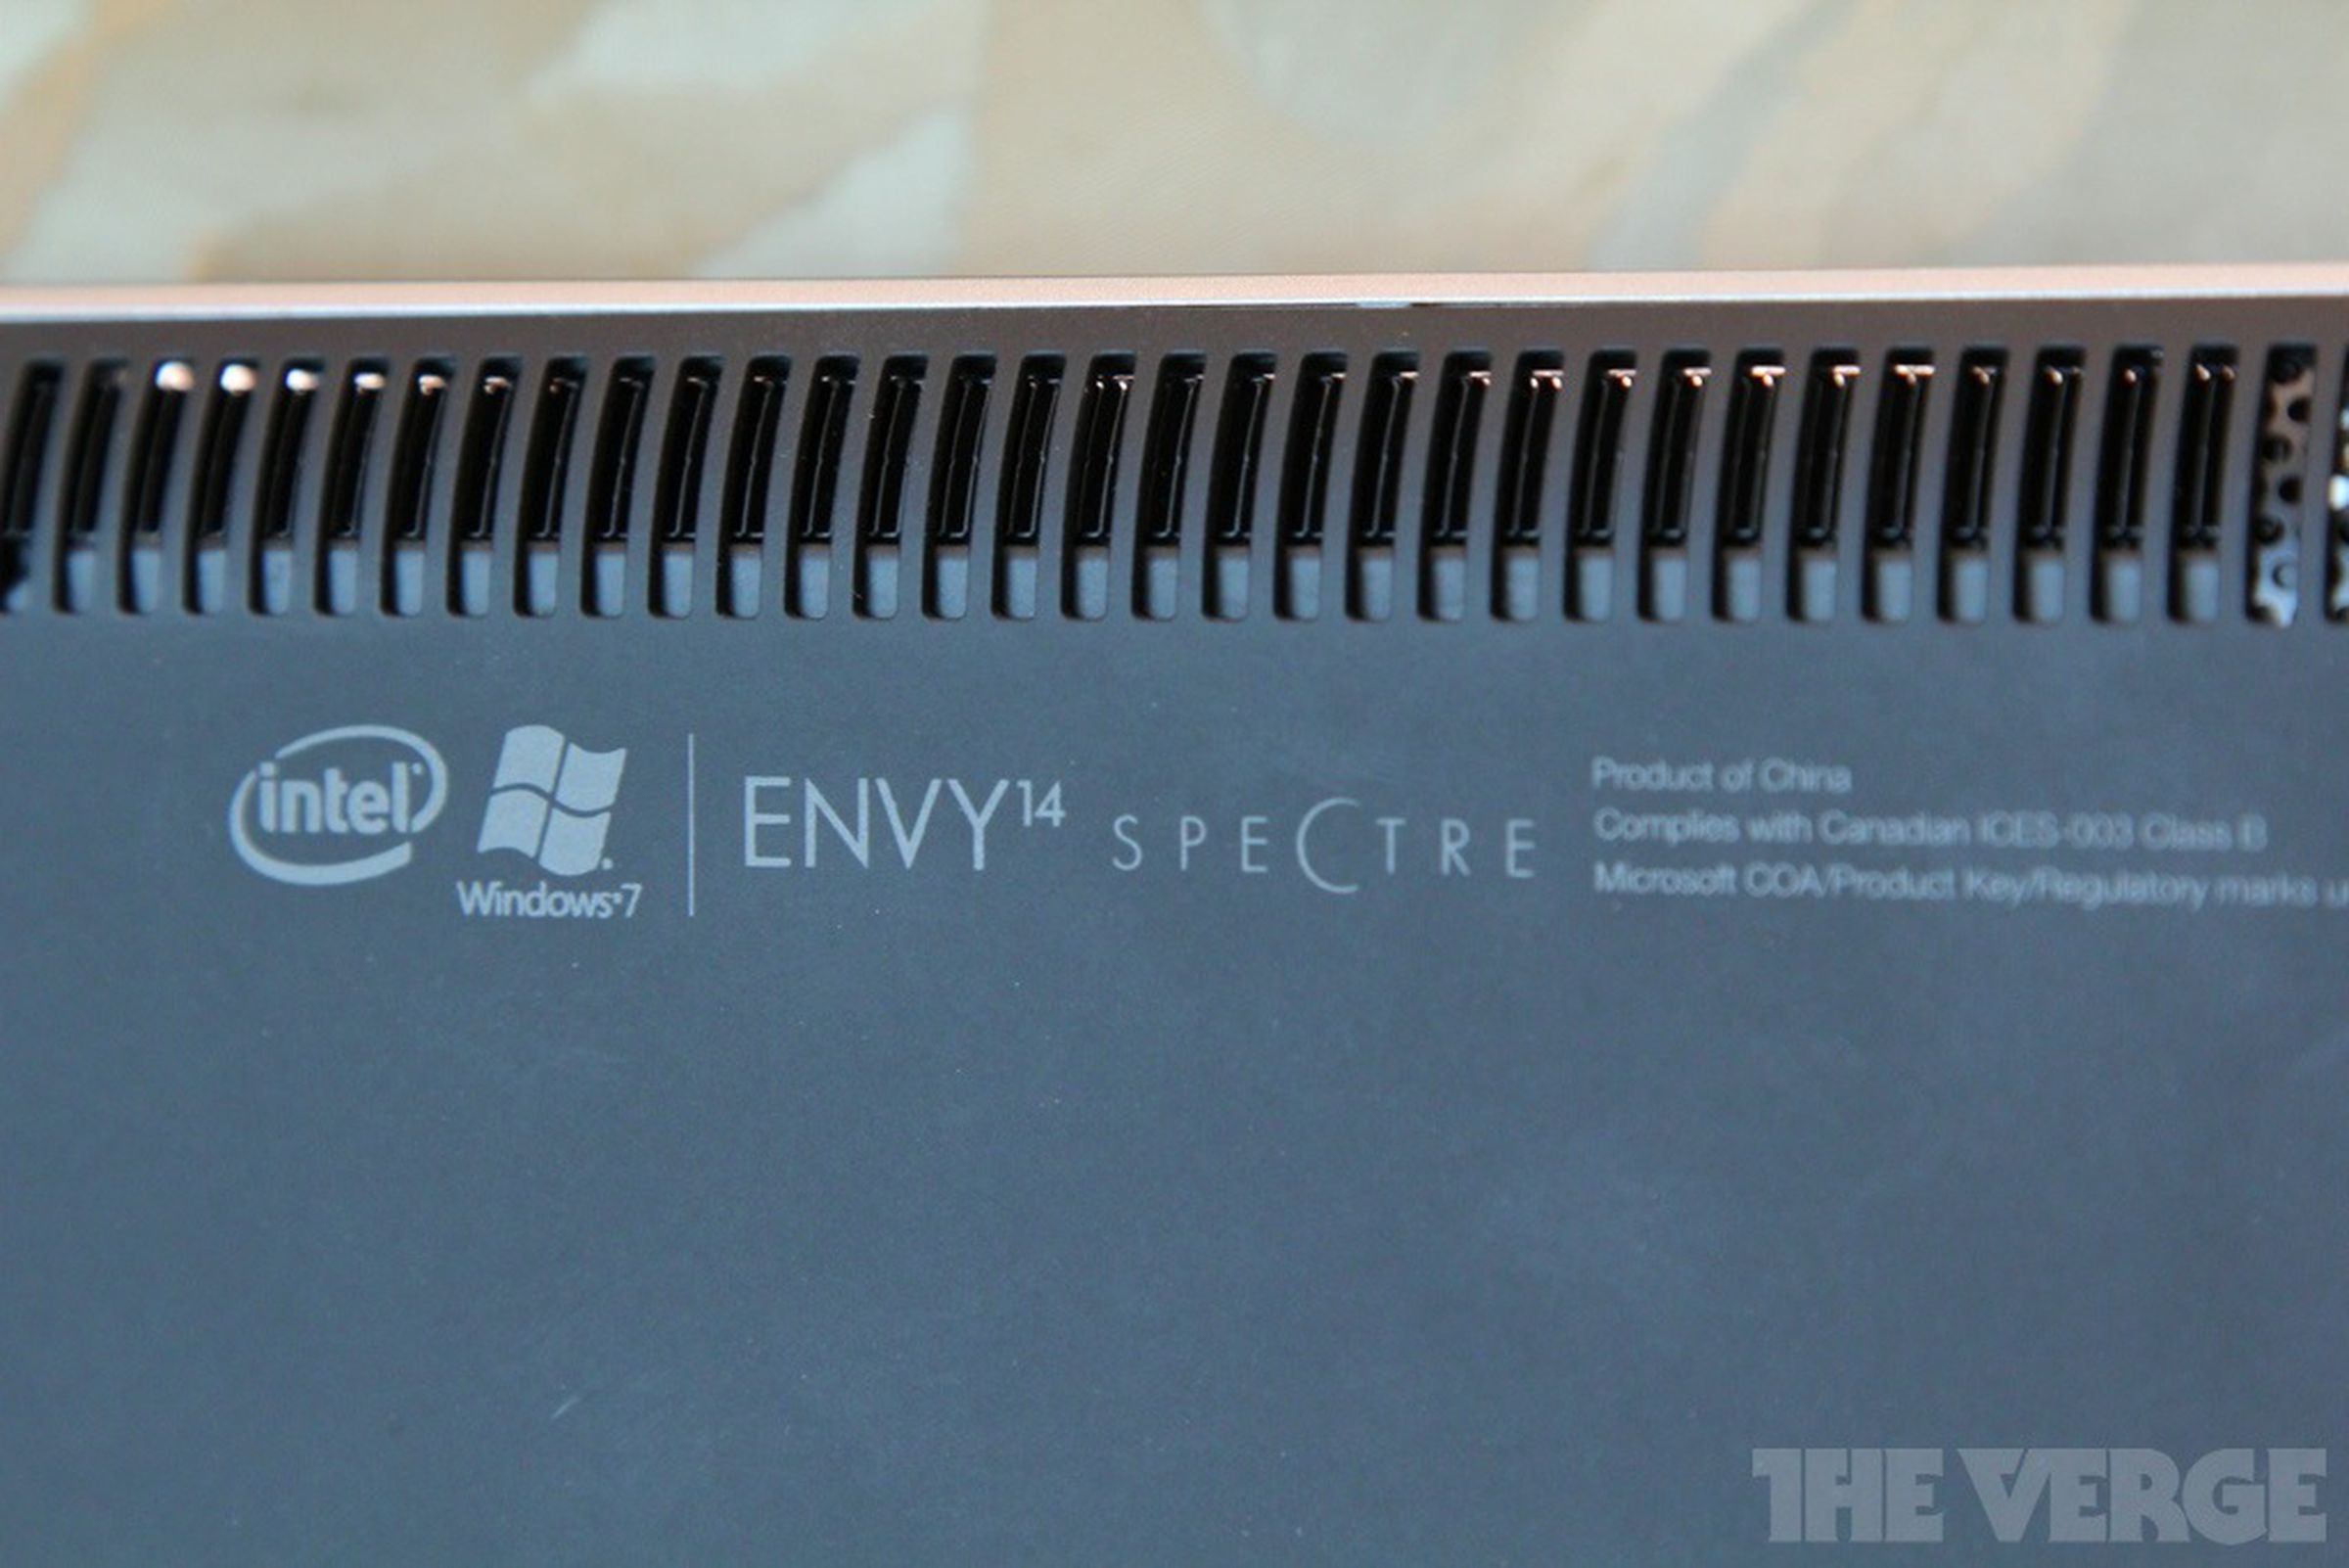 Envy 14 Spectre review pictures